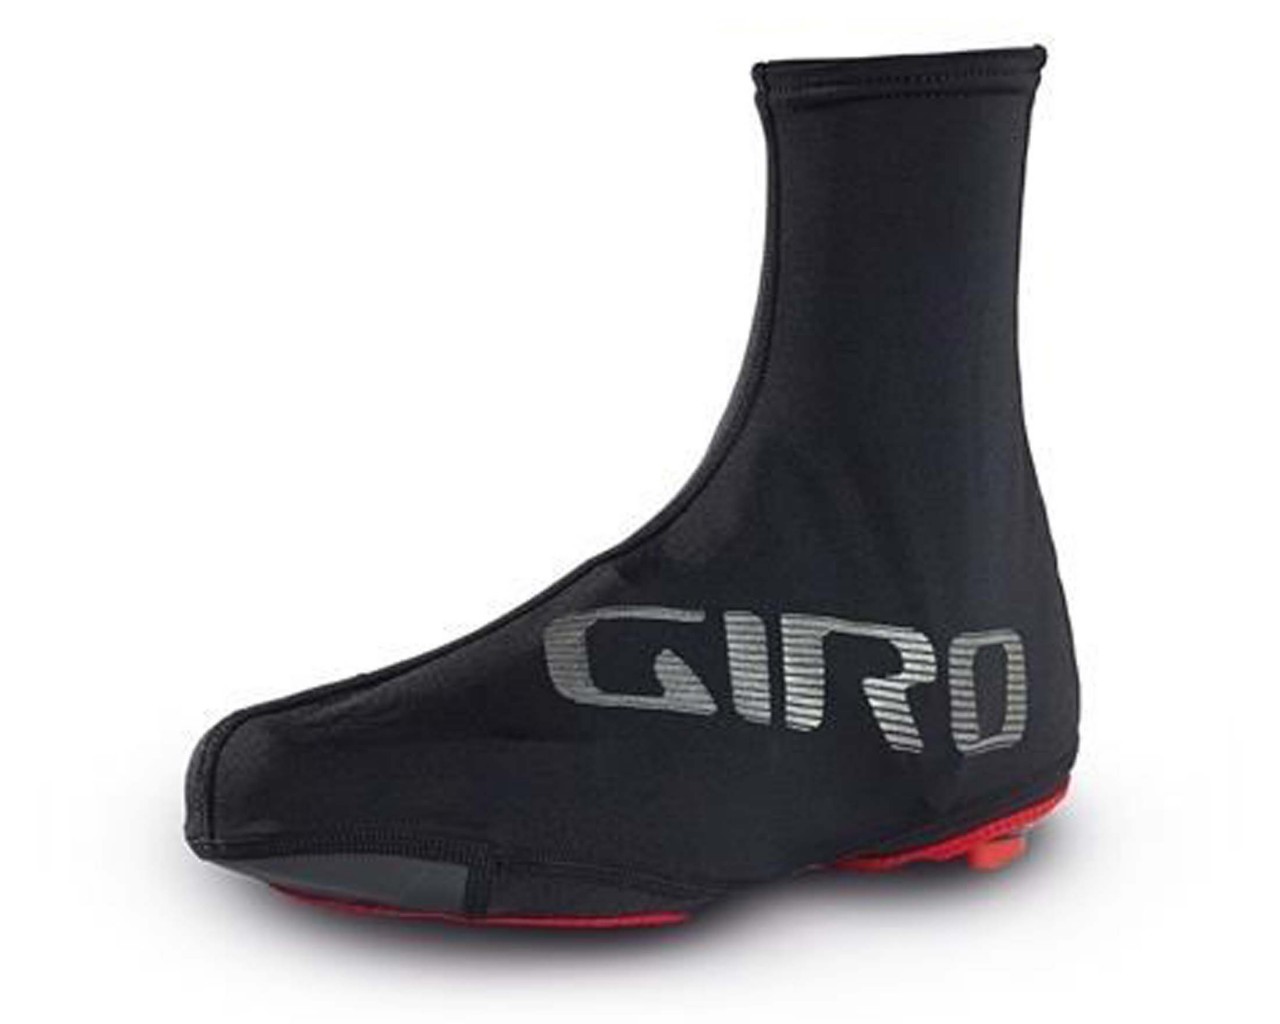 Giro Ultralight Aero Shoe Cover - Überschuhe | black